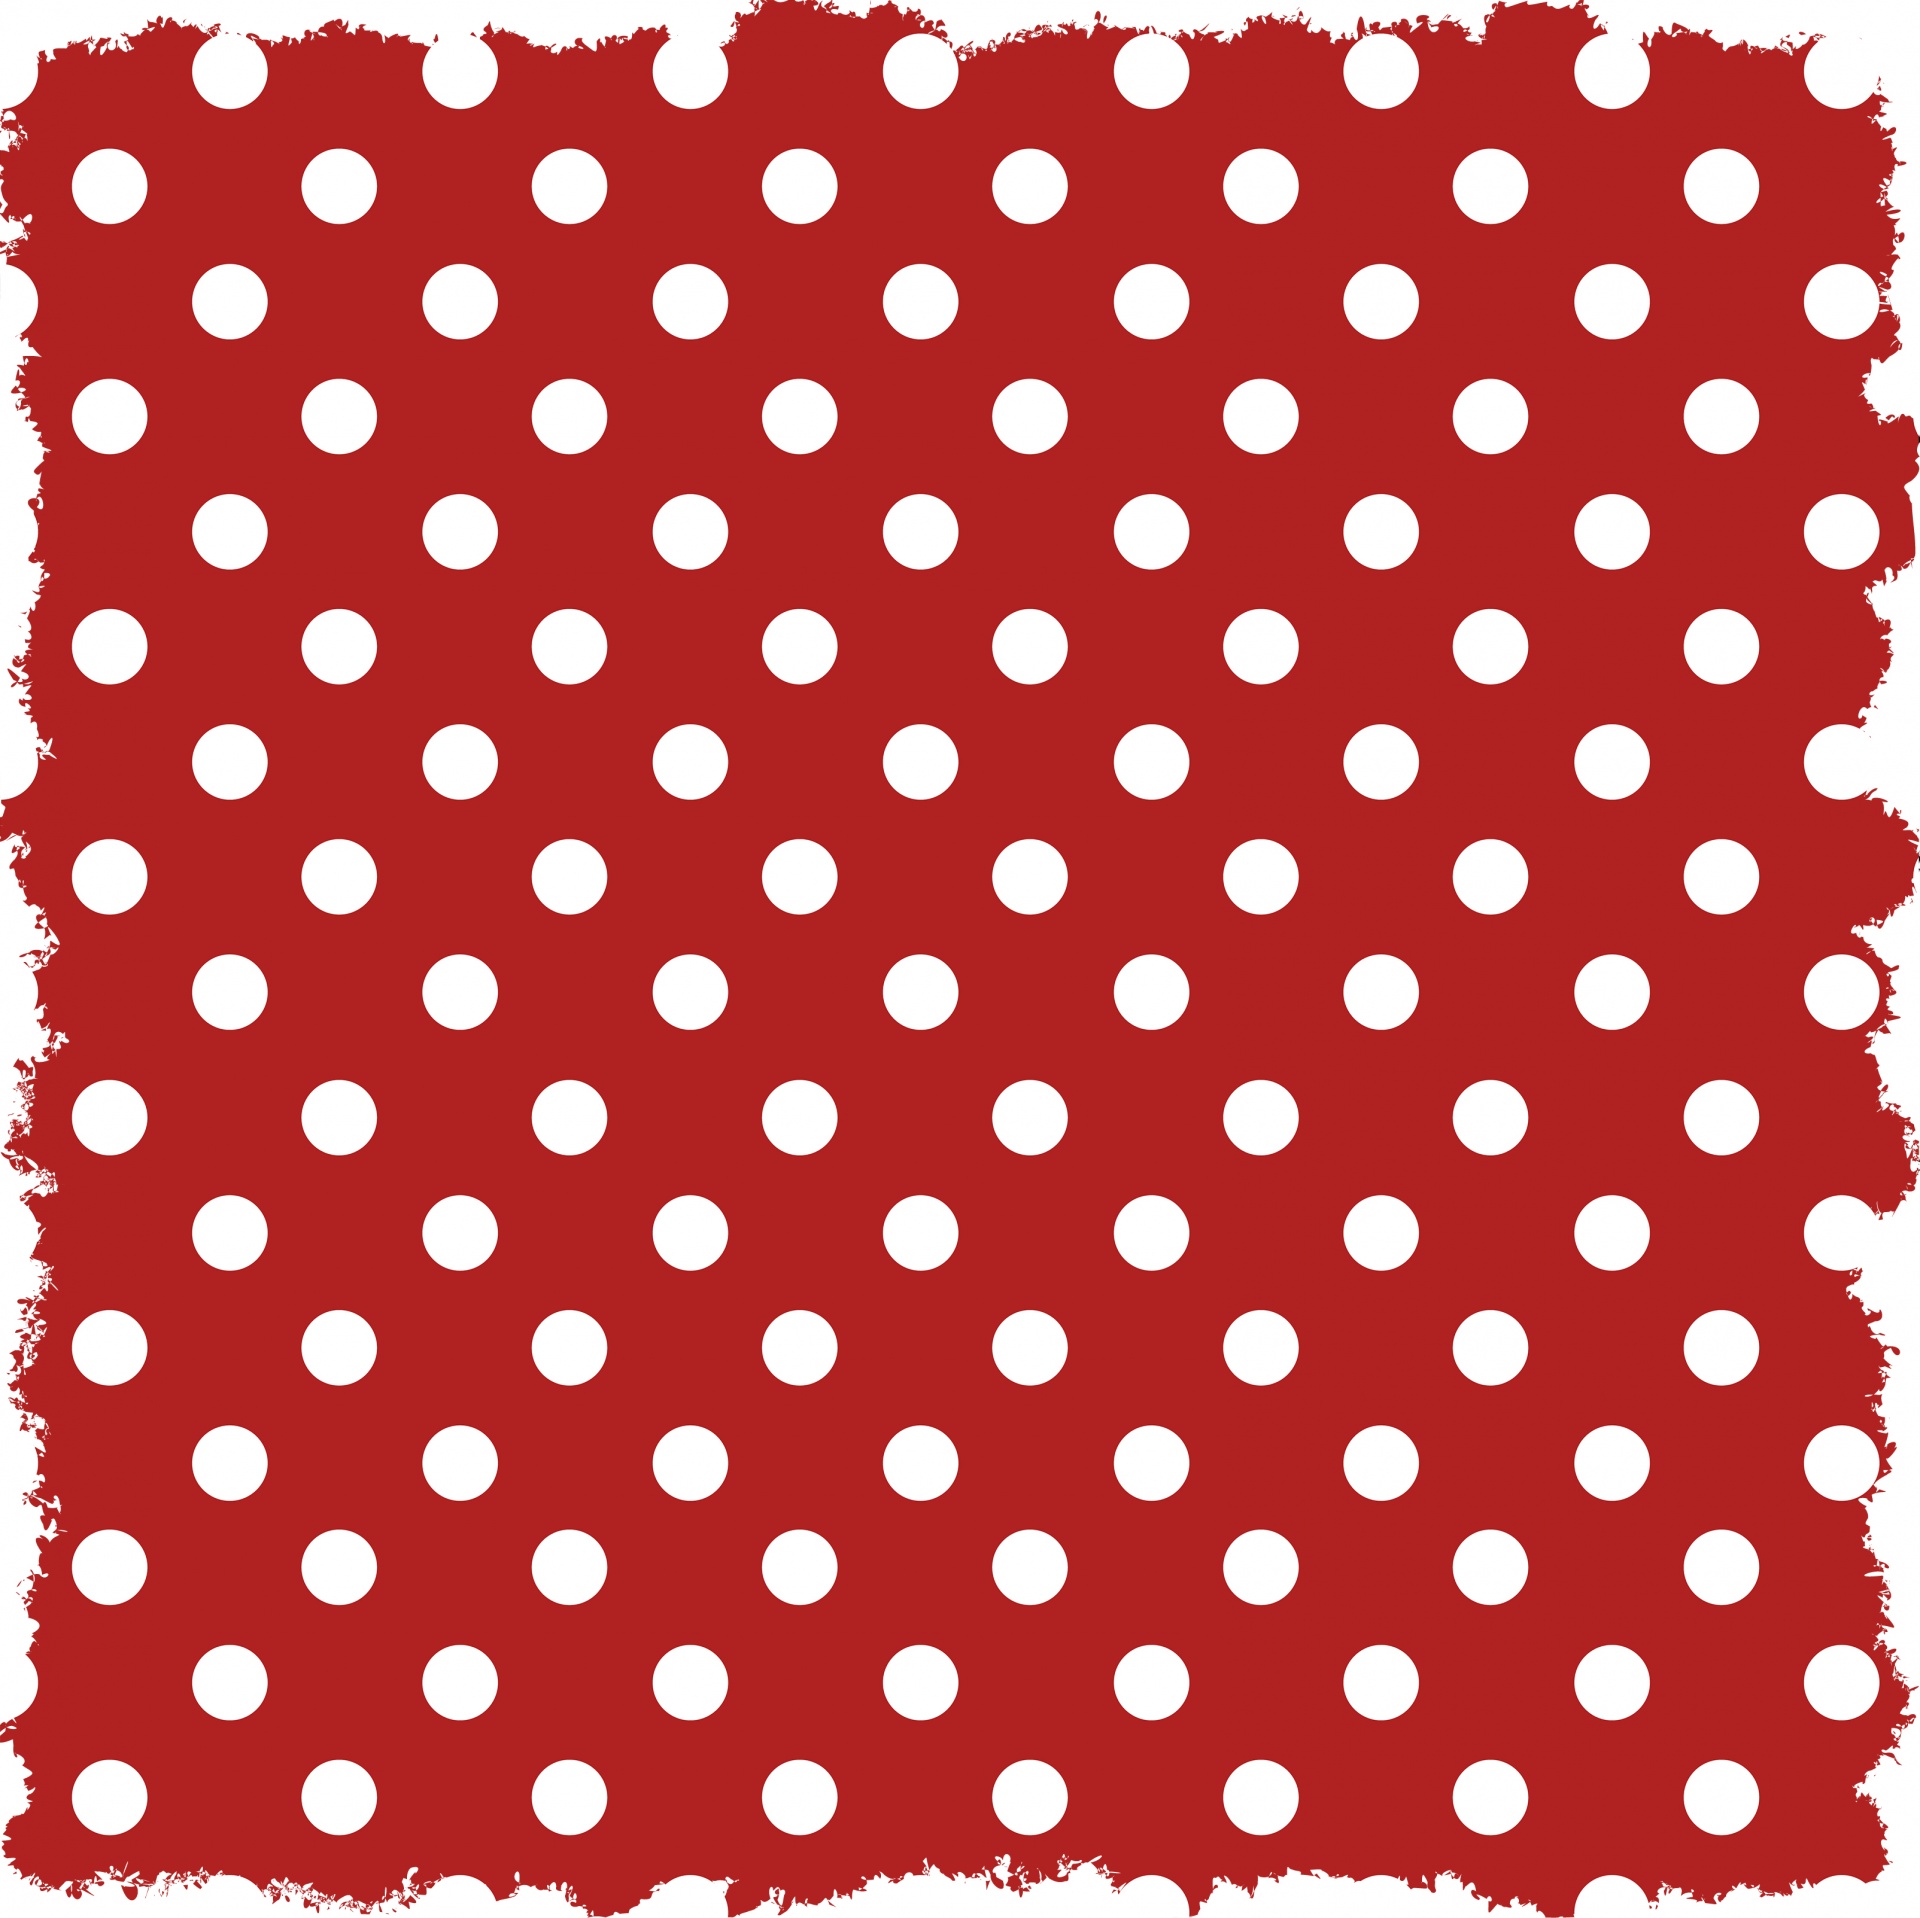 Polka Dots Red White